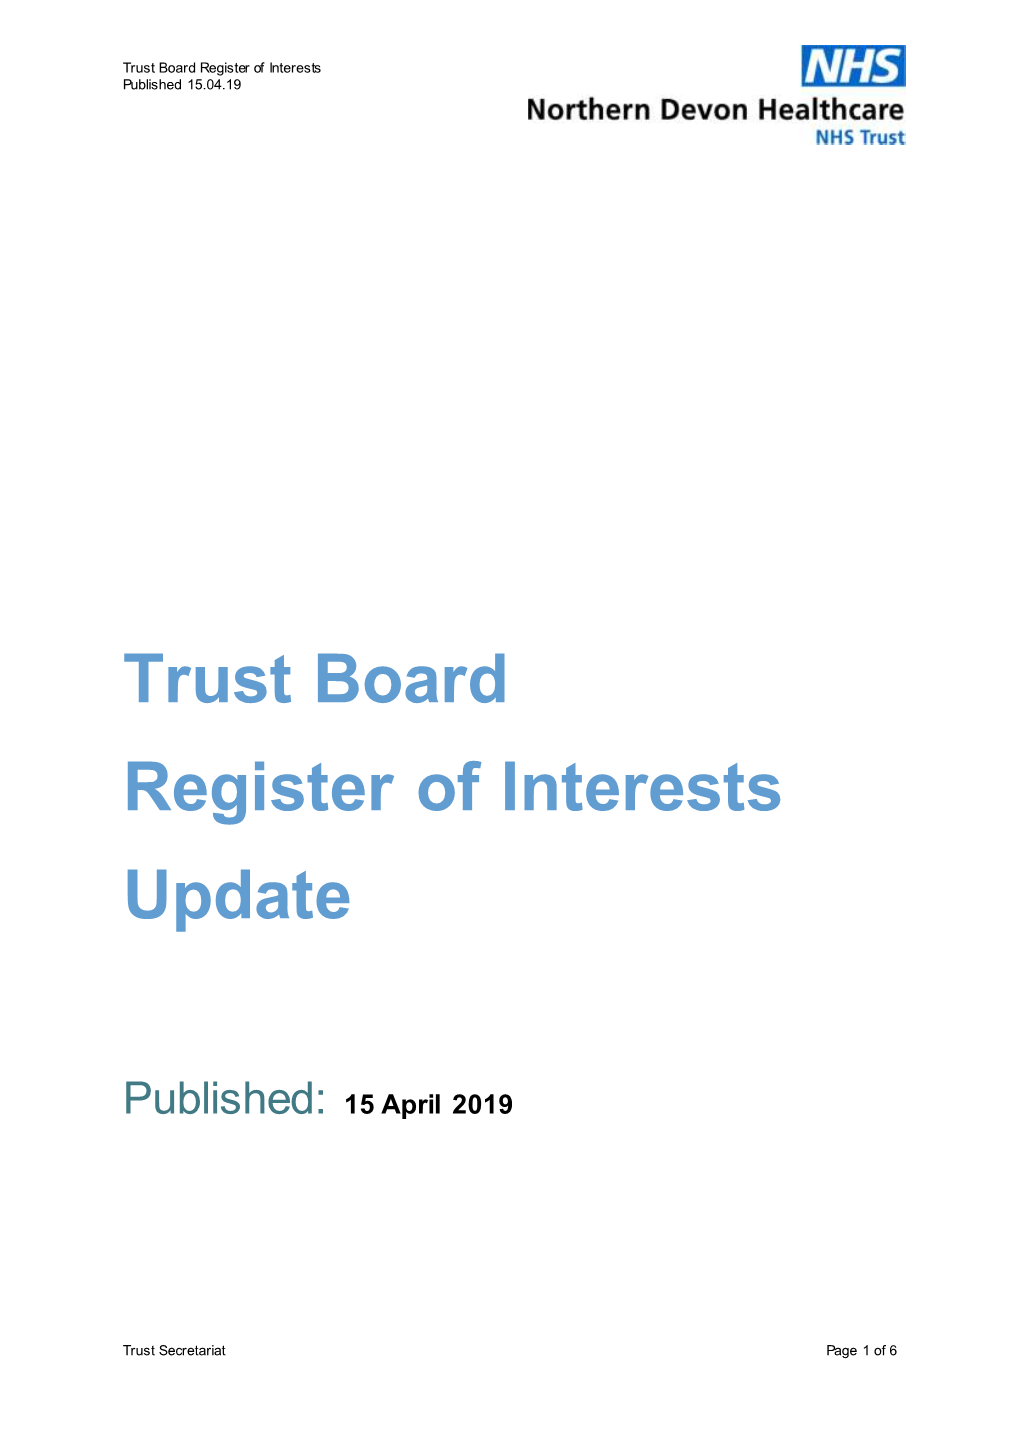 Trust Board Register of Interests Update